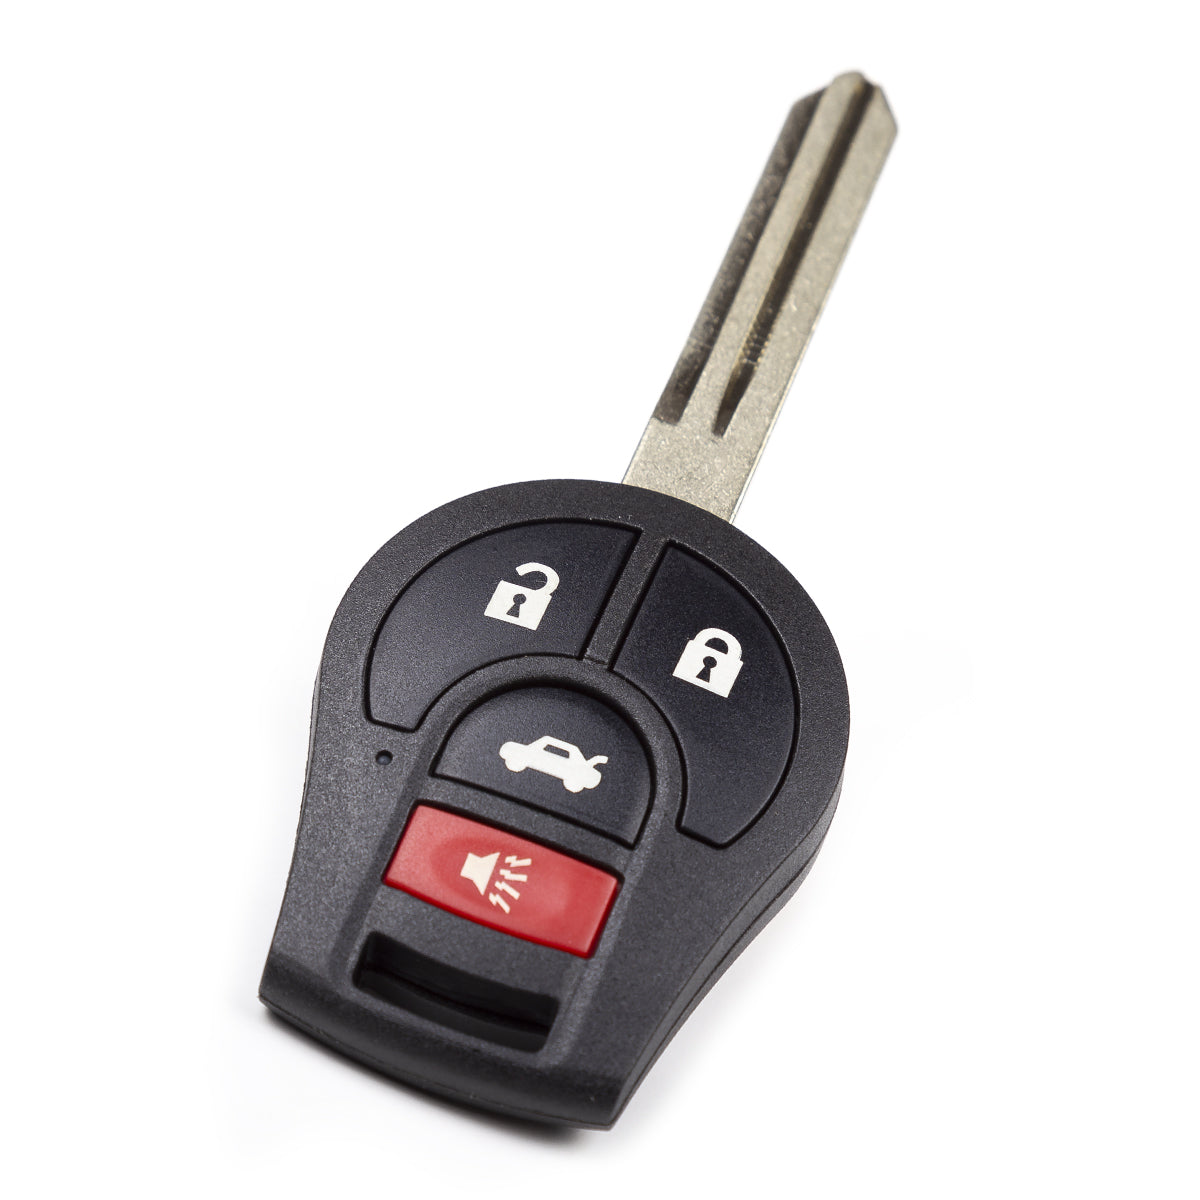 2015 Nissan Sentra Key Fob - Aftermarket - 4 Buttons Fob FCC# CWTWB1U751 - ID46 Chip